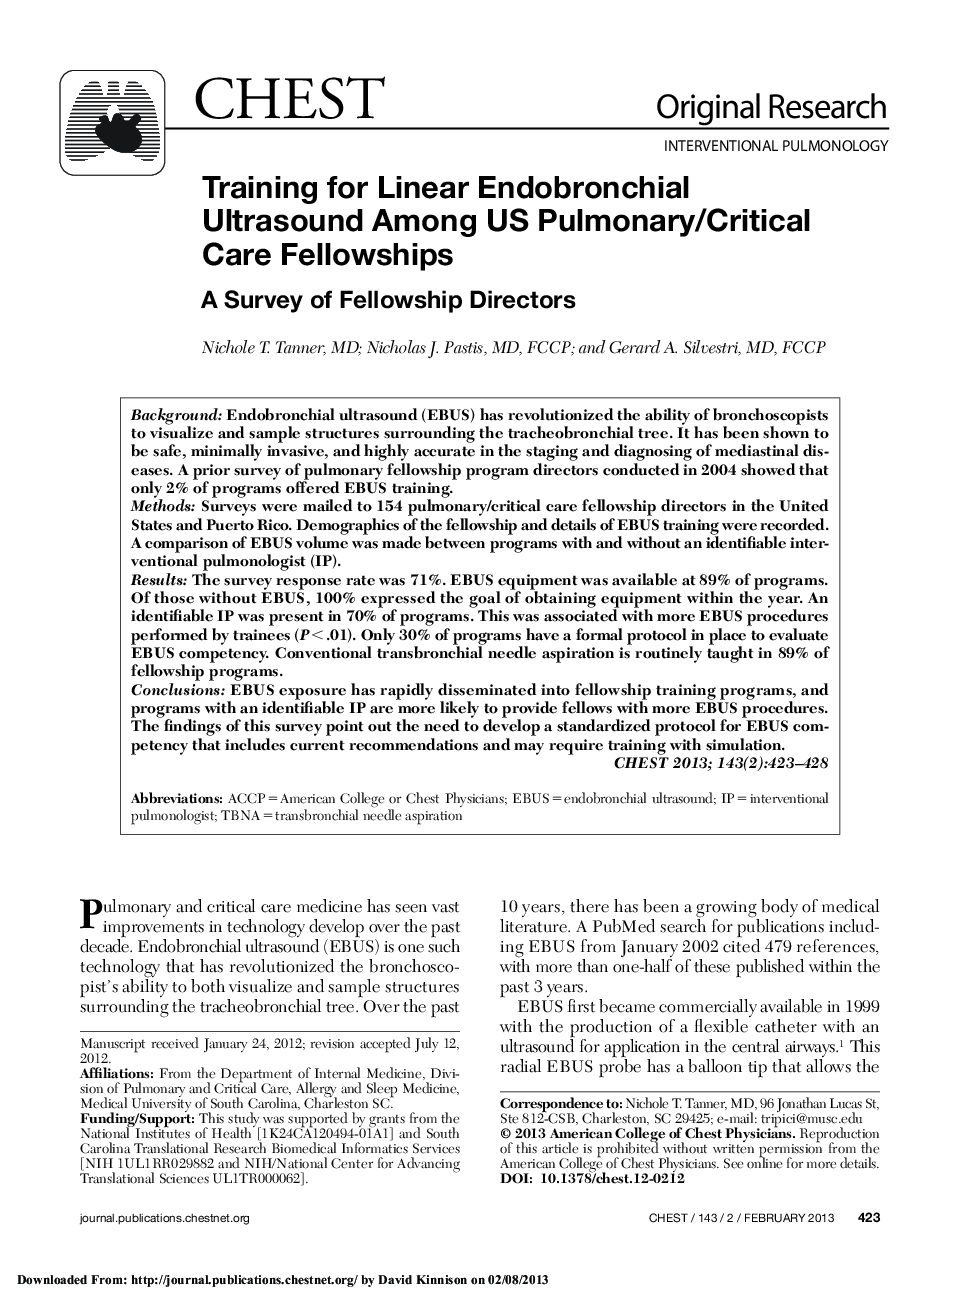 Training for Linear Endobronchial Ultrasound Among US Pulmonary/Critical Care Fellowships